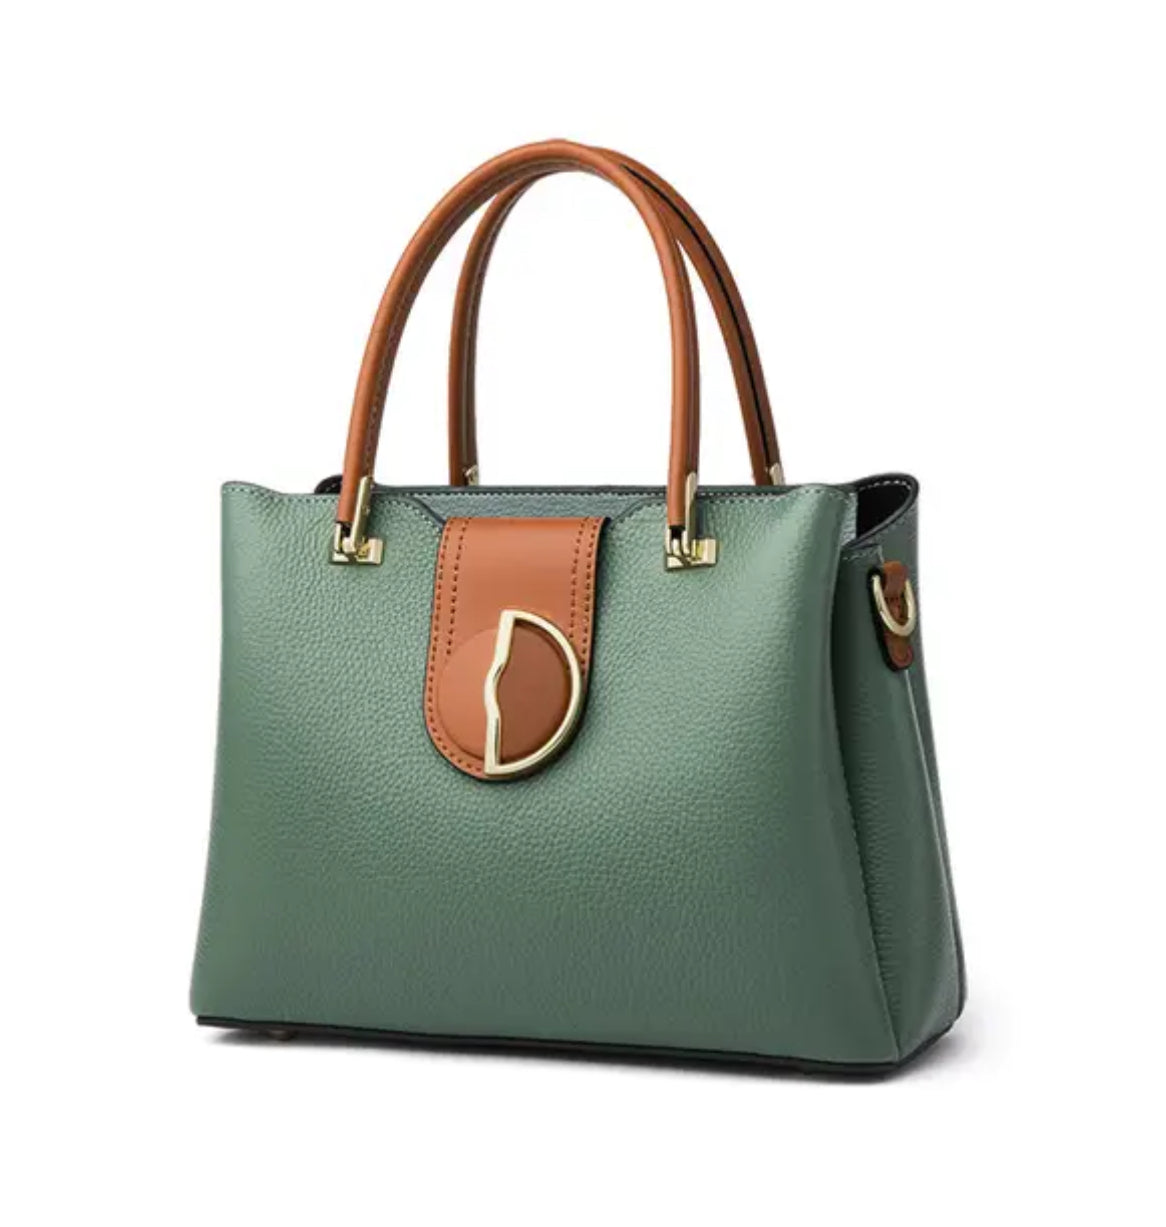 Mila/Genuine Leather Bag | Dual Color Crossbody | Top Handle Bag